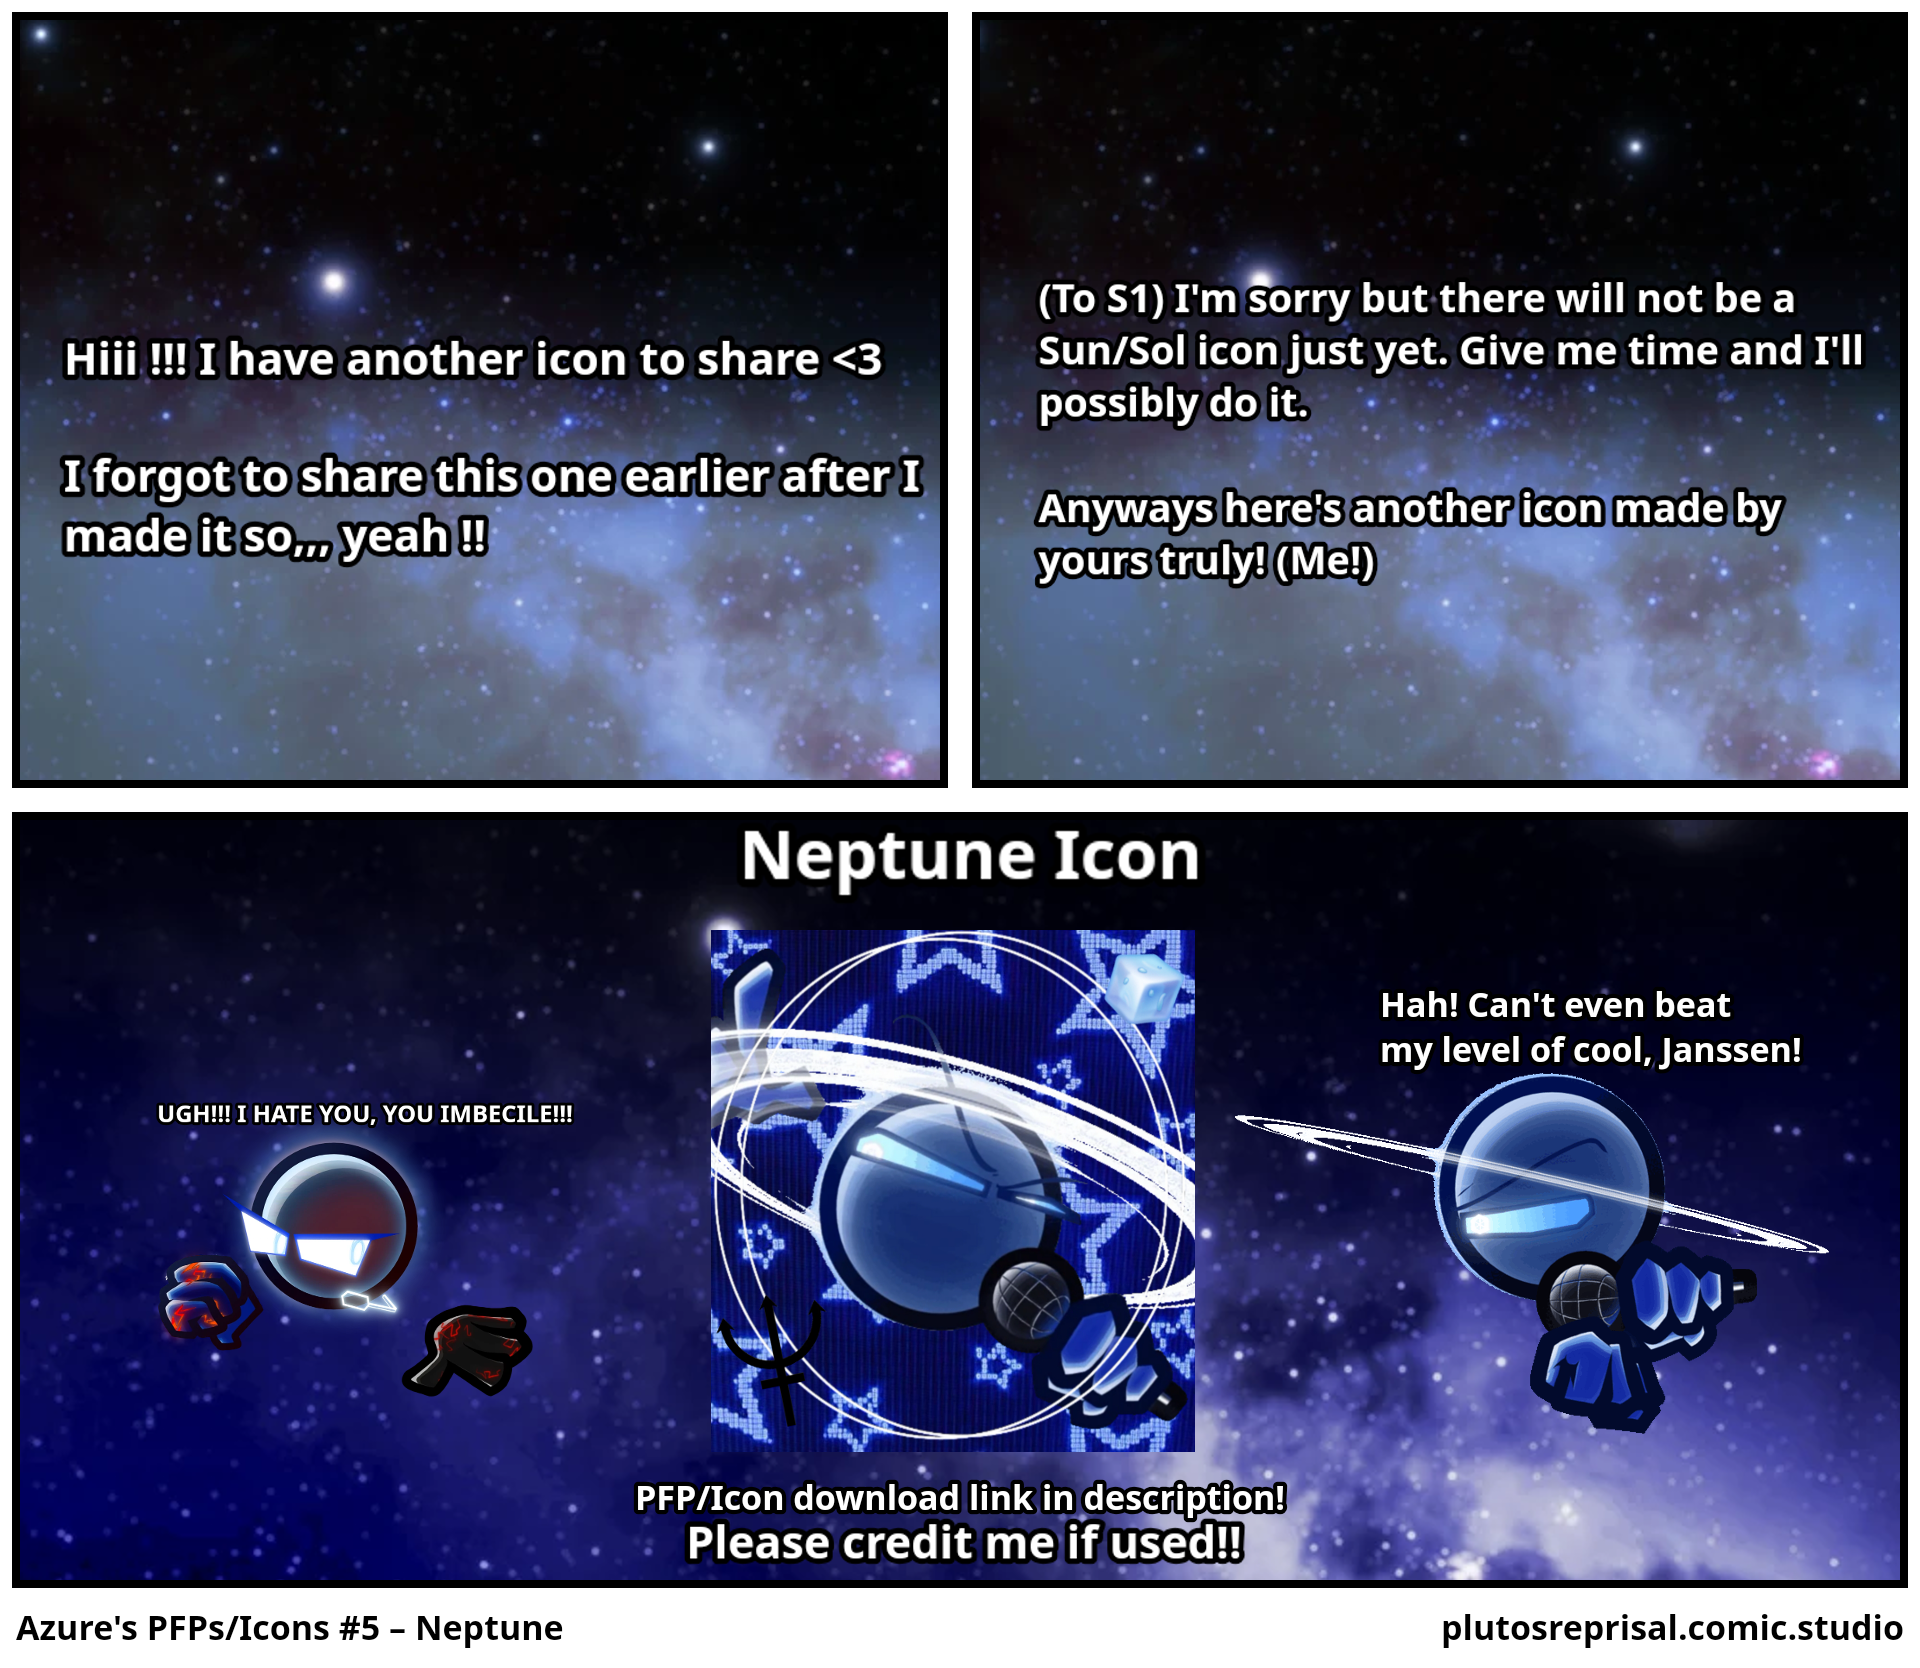 Azure's PFPs/Icons #5 – Neptune